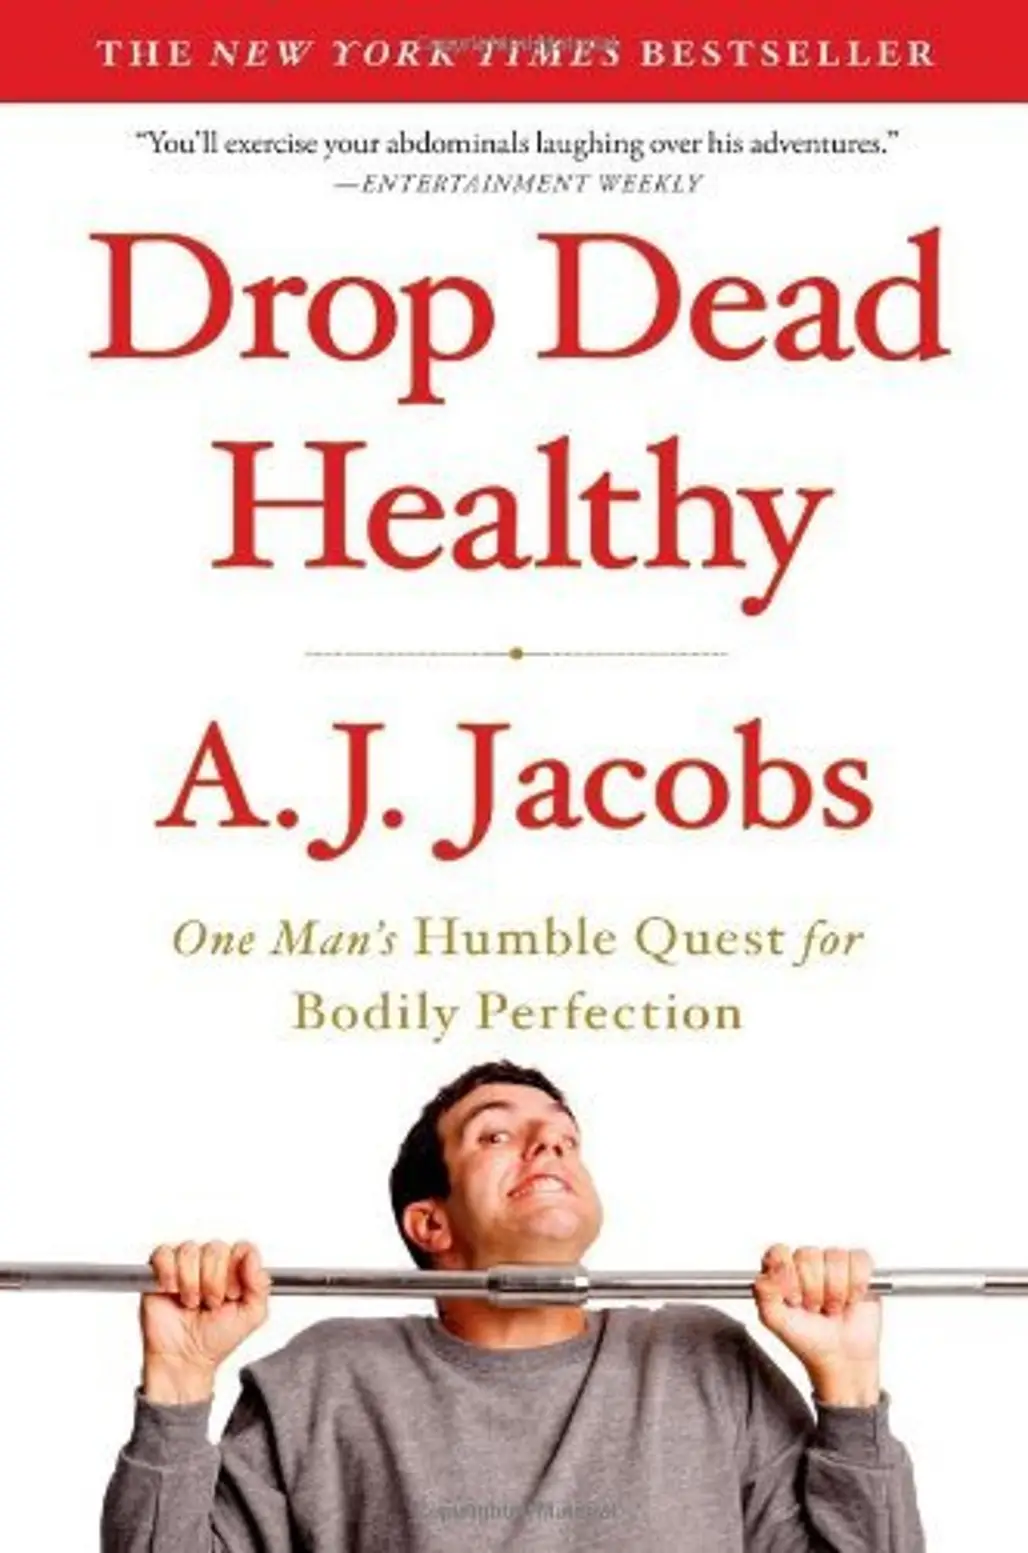 Drop Dead Healthy by AJ Jacobs